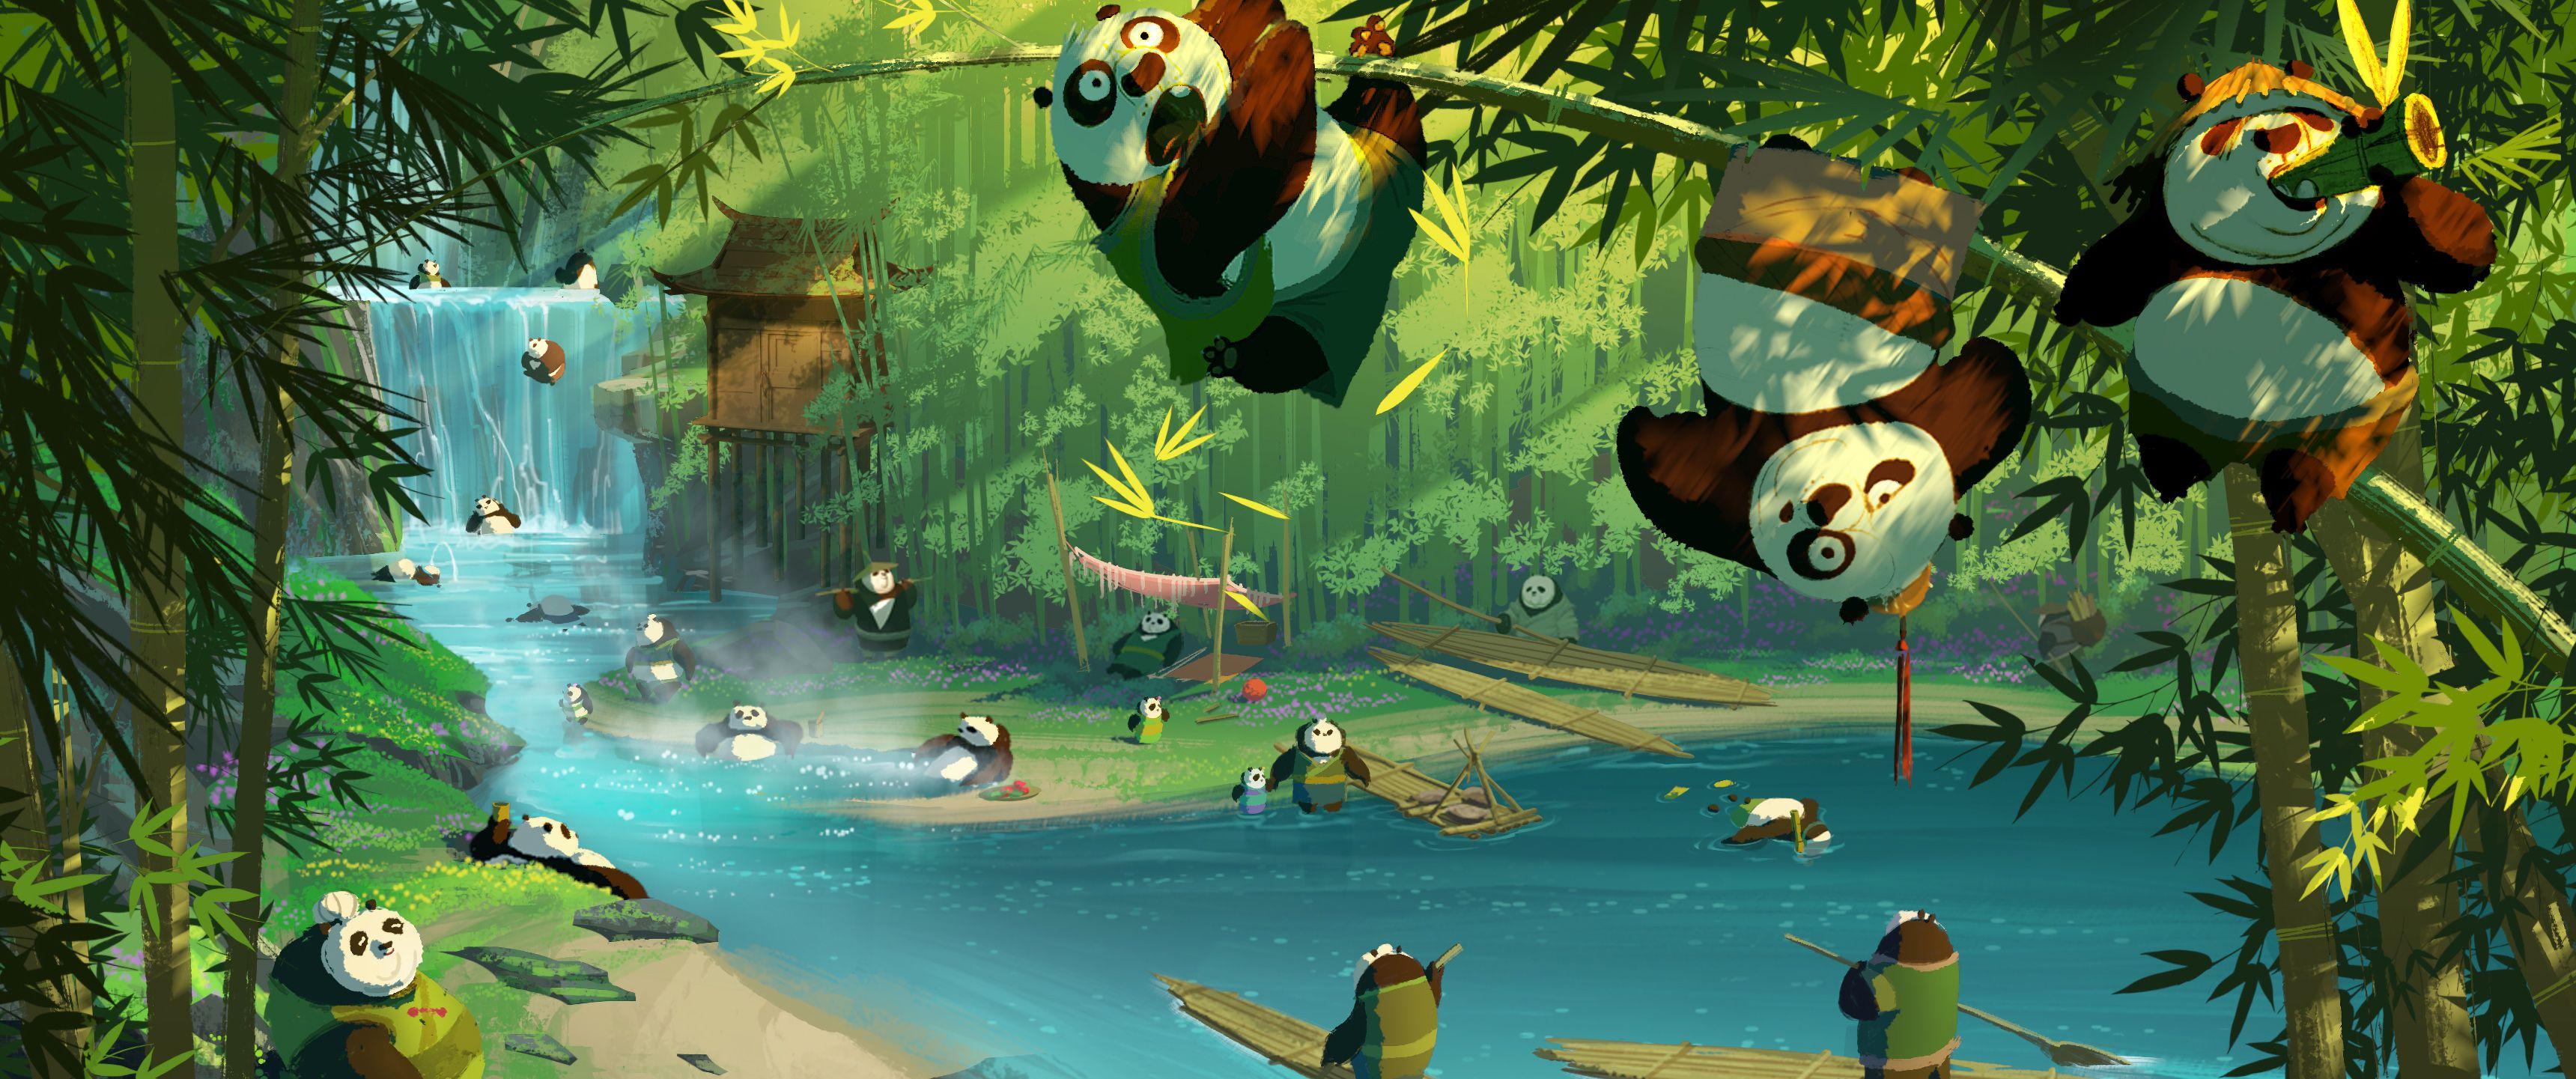 Album] Kung Fu Panda Wallpaper [3440x1440]